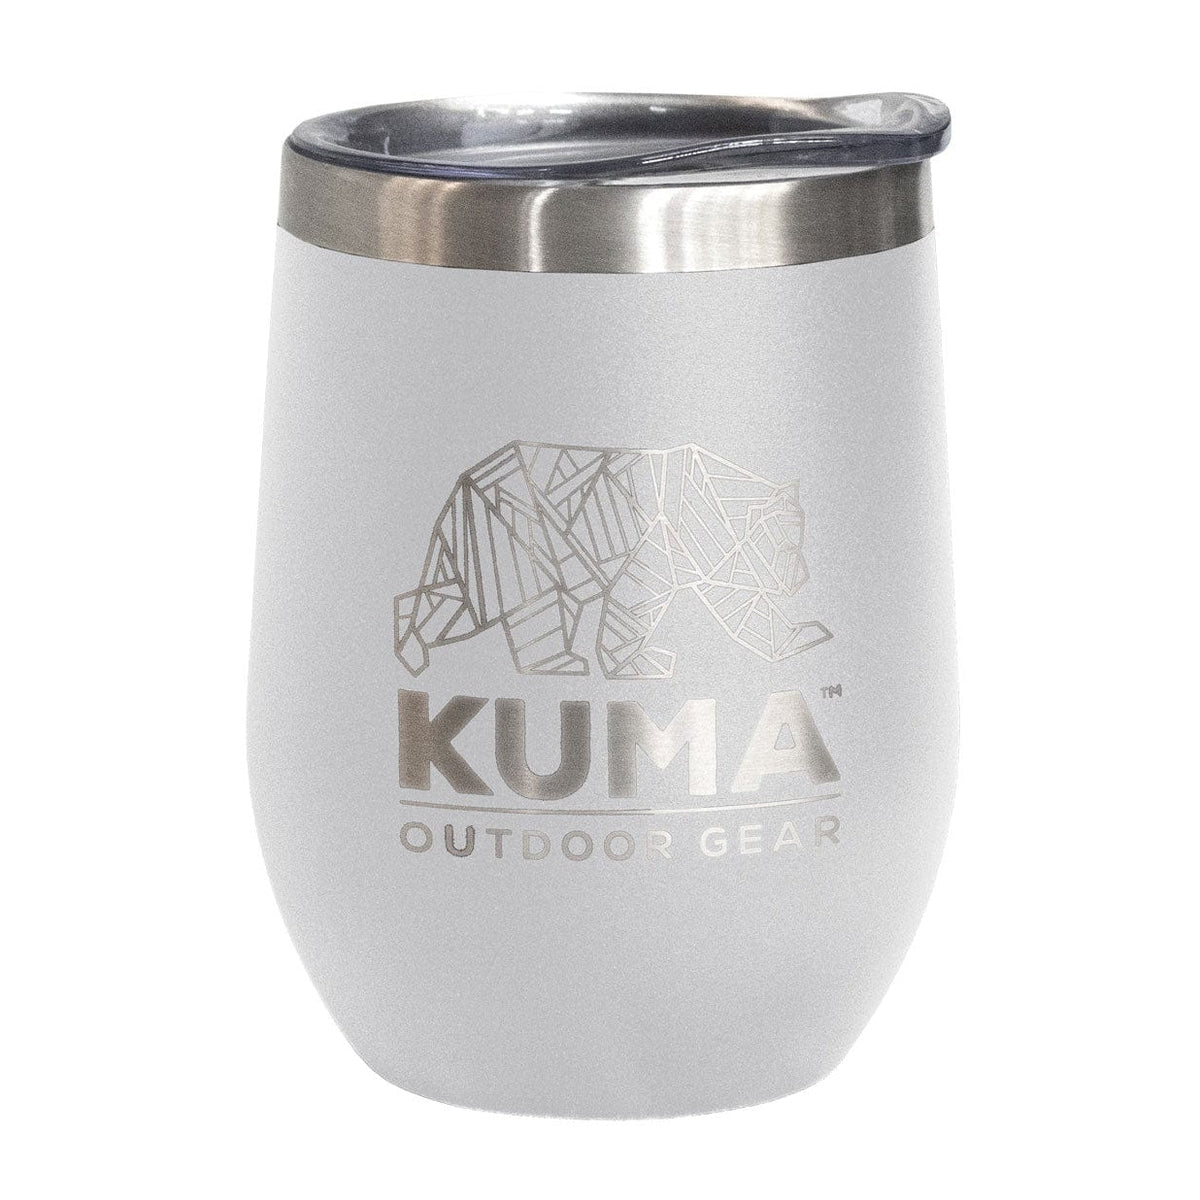 Kuma Outdoor Gear Qualifies for Free Shipping Kuma Outdoor Gear Wine Tumbler White 12 Oz #KM-WT-WH